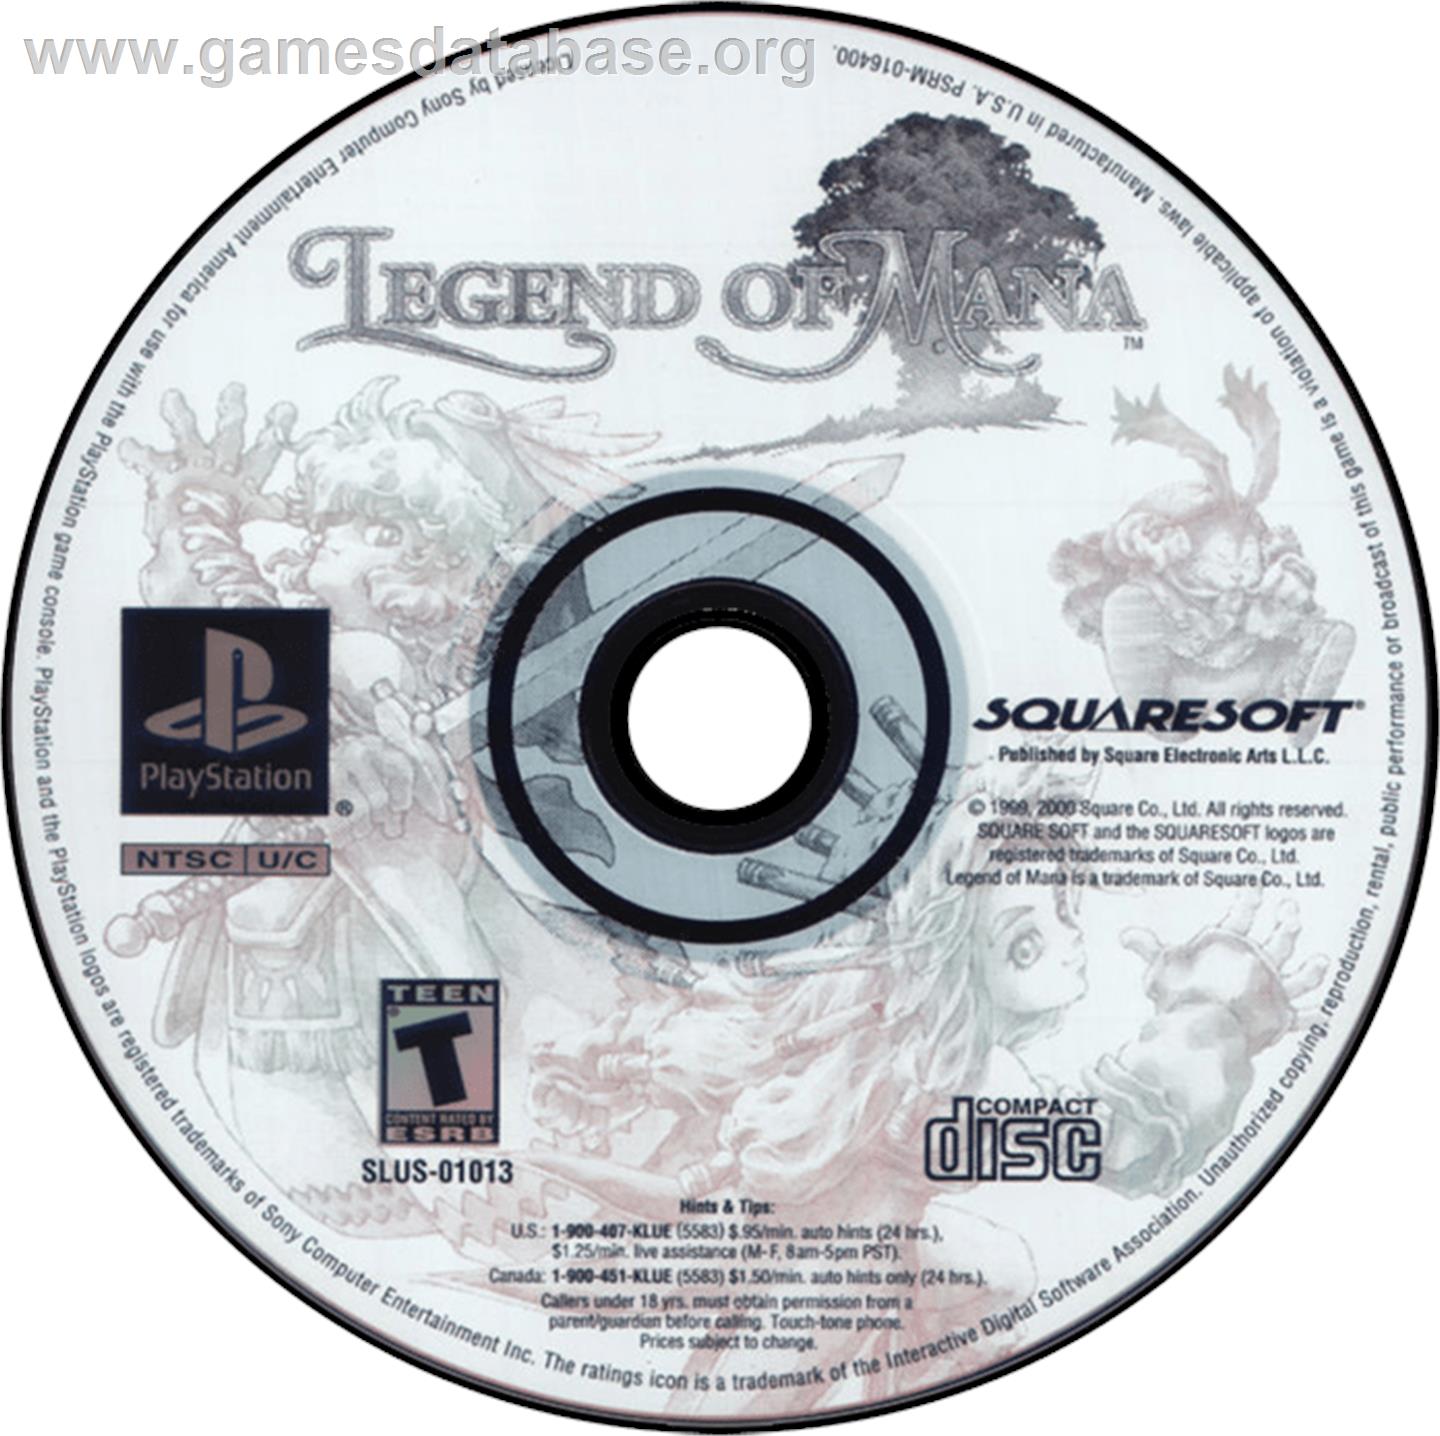 Legend of Mana - Sony Playstation - Artwork - Disc